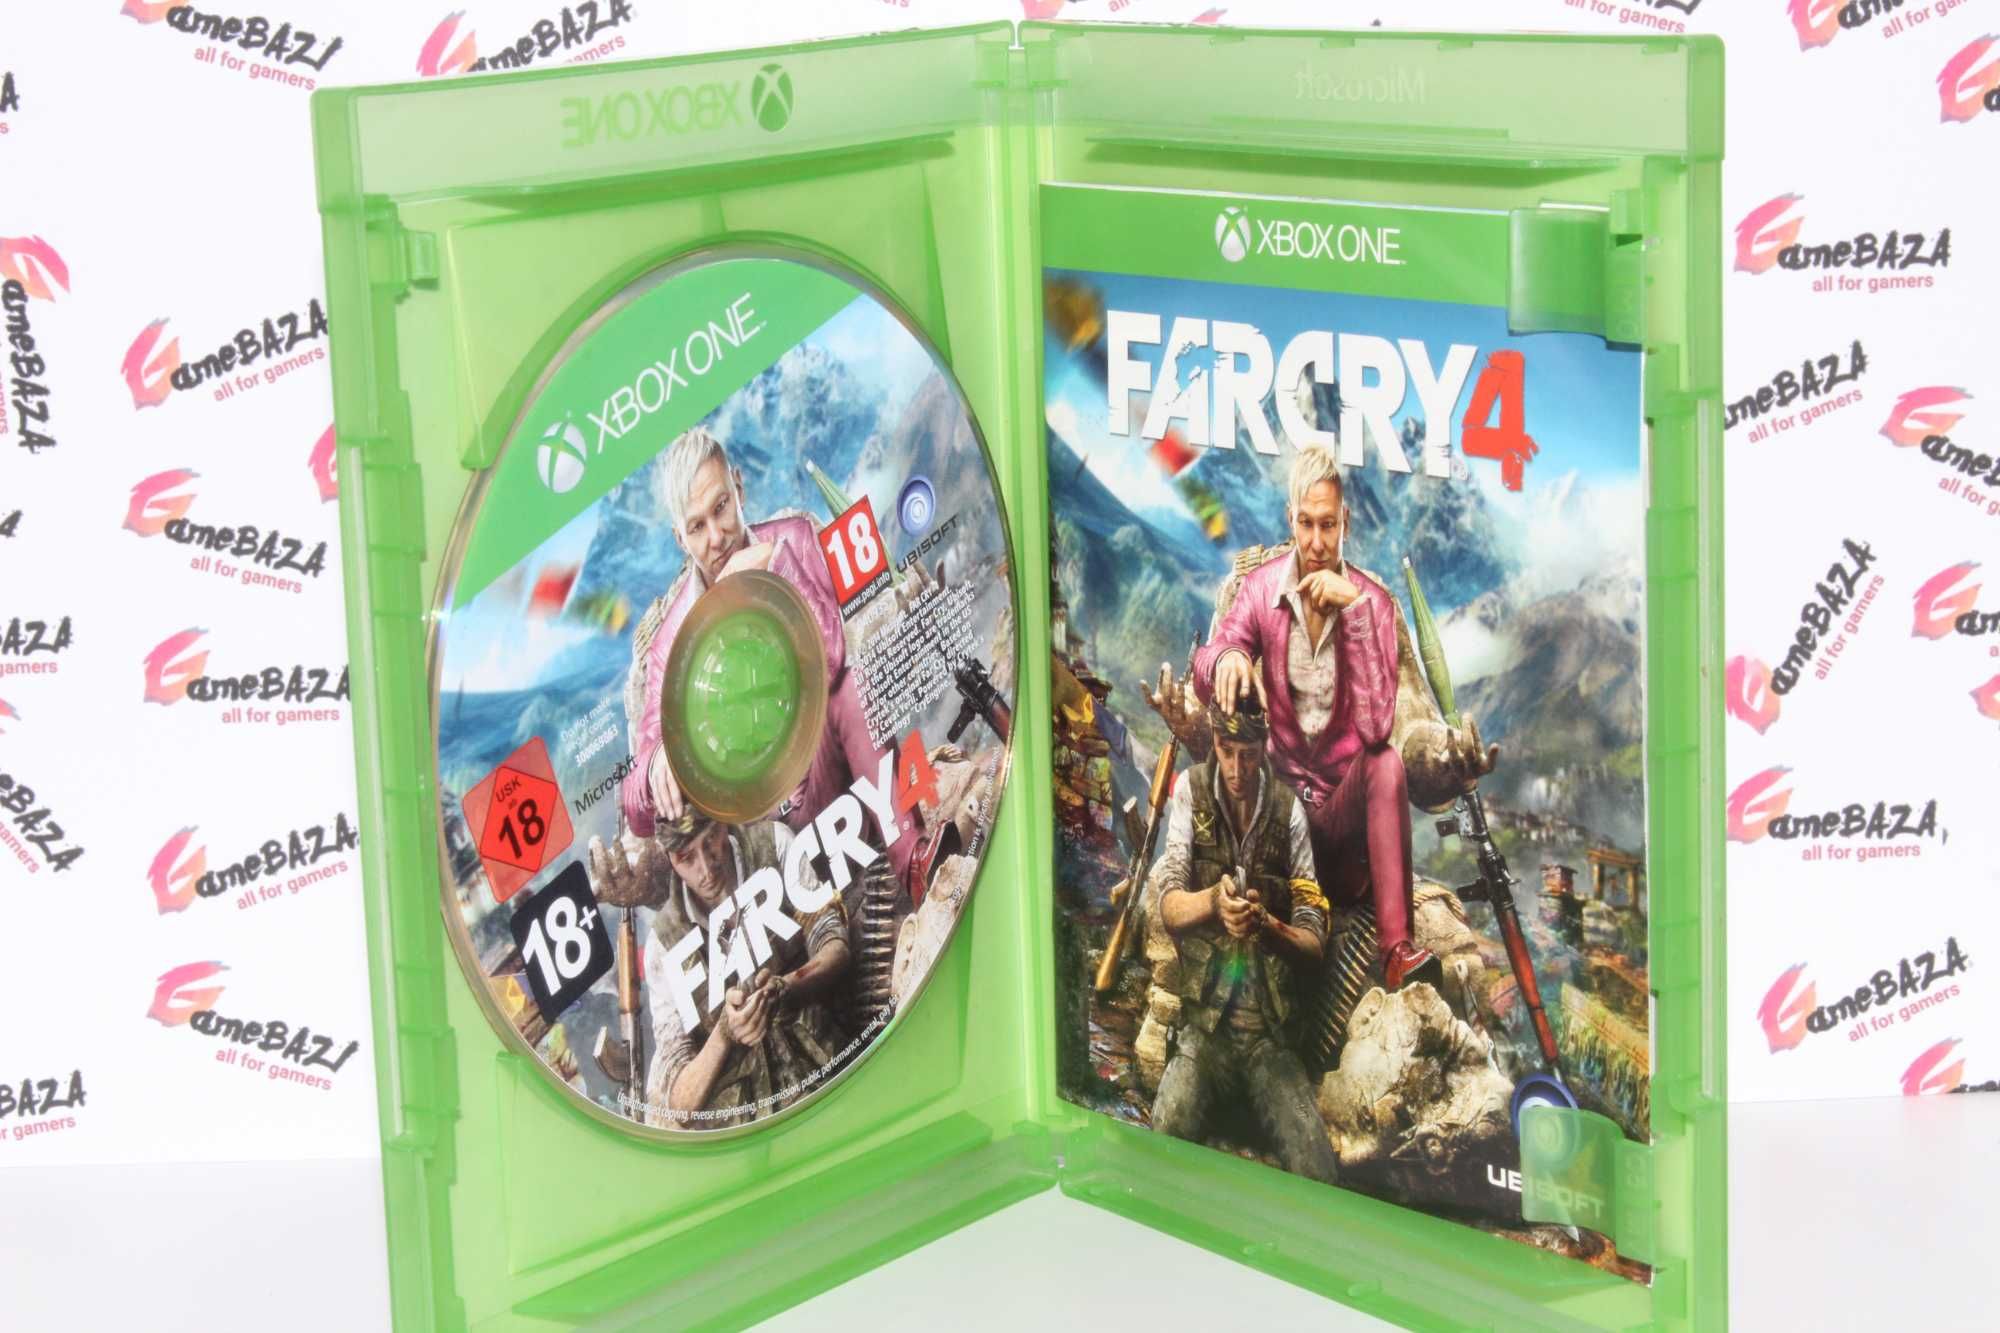 PL Far Cry 4 Limited Edition Xbox One GameBAZA